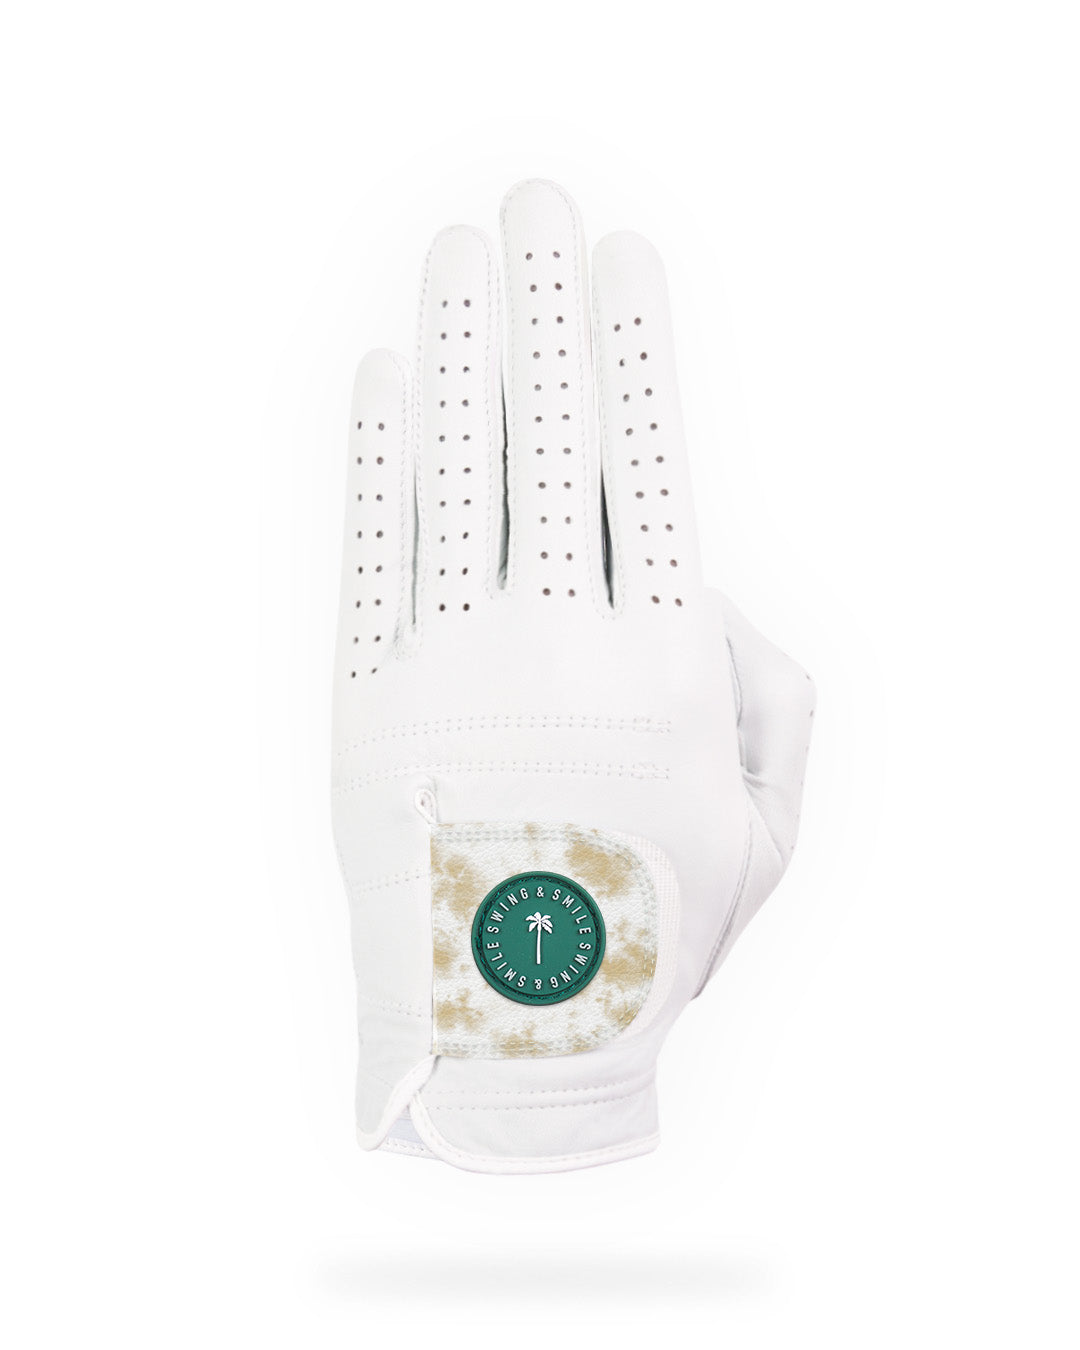 Men's S&S Glove - Palm Golf Co.